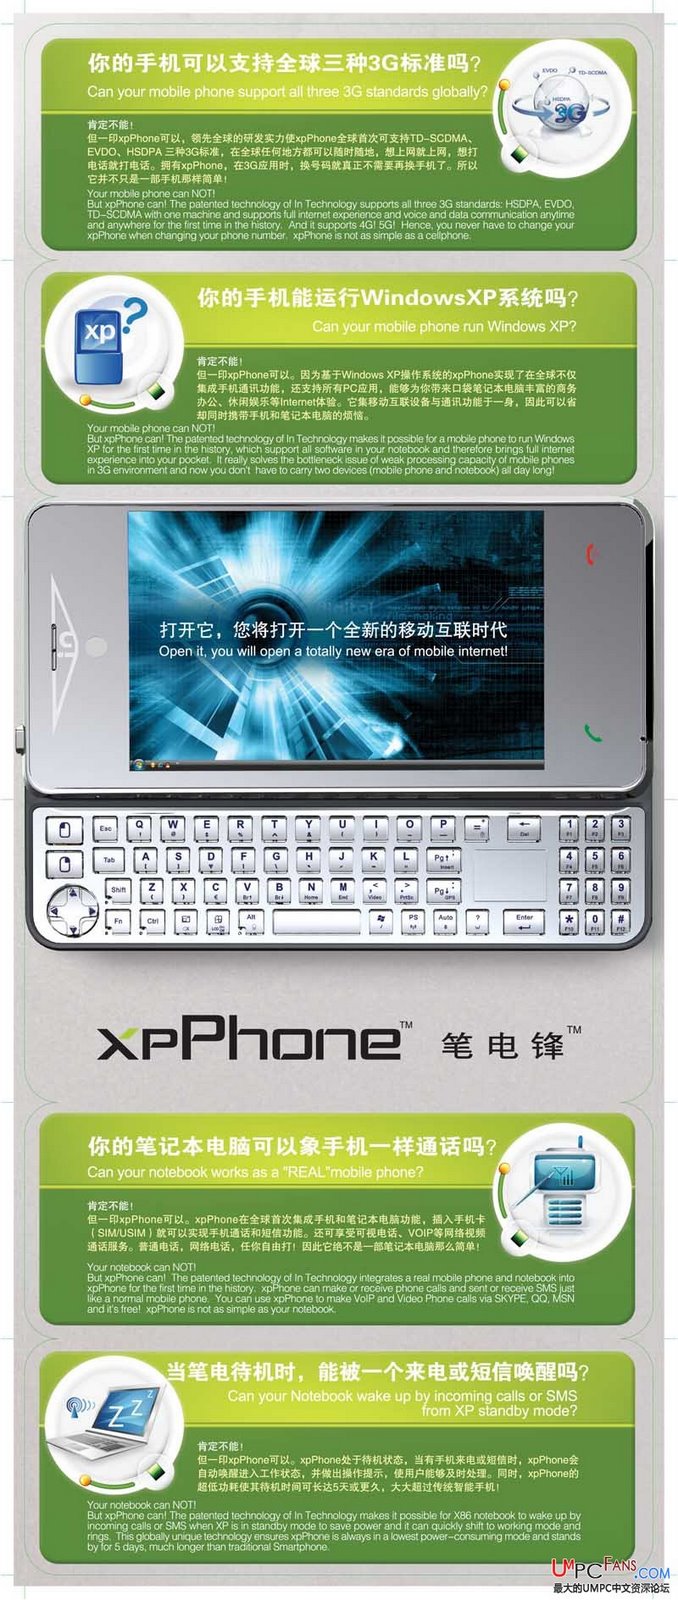 xpPhone 全球第一款手机、GPS、笔记本电脑、三合一，支持3种3G(转载)